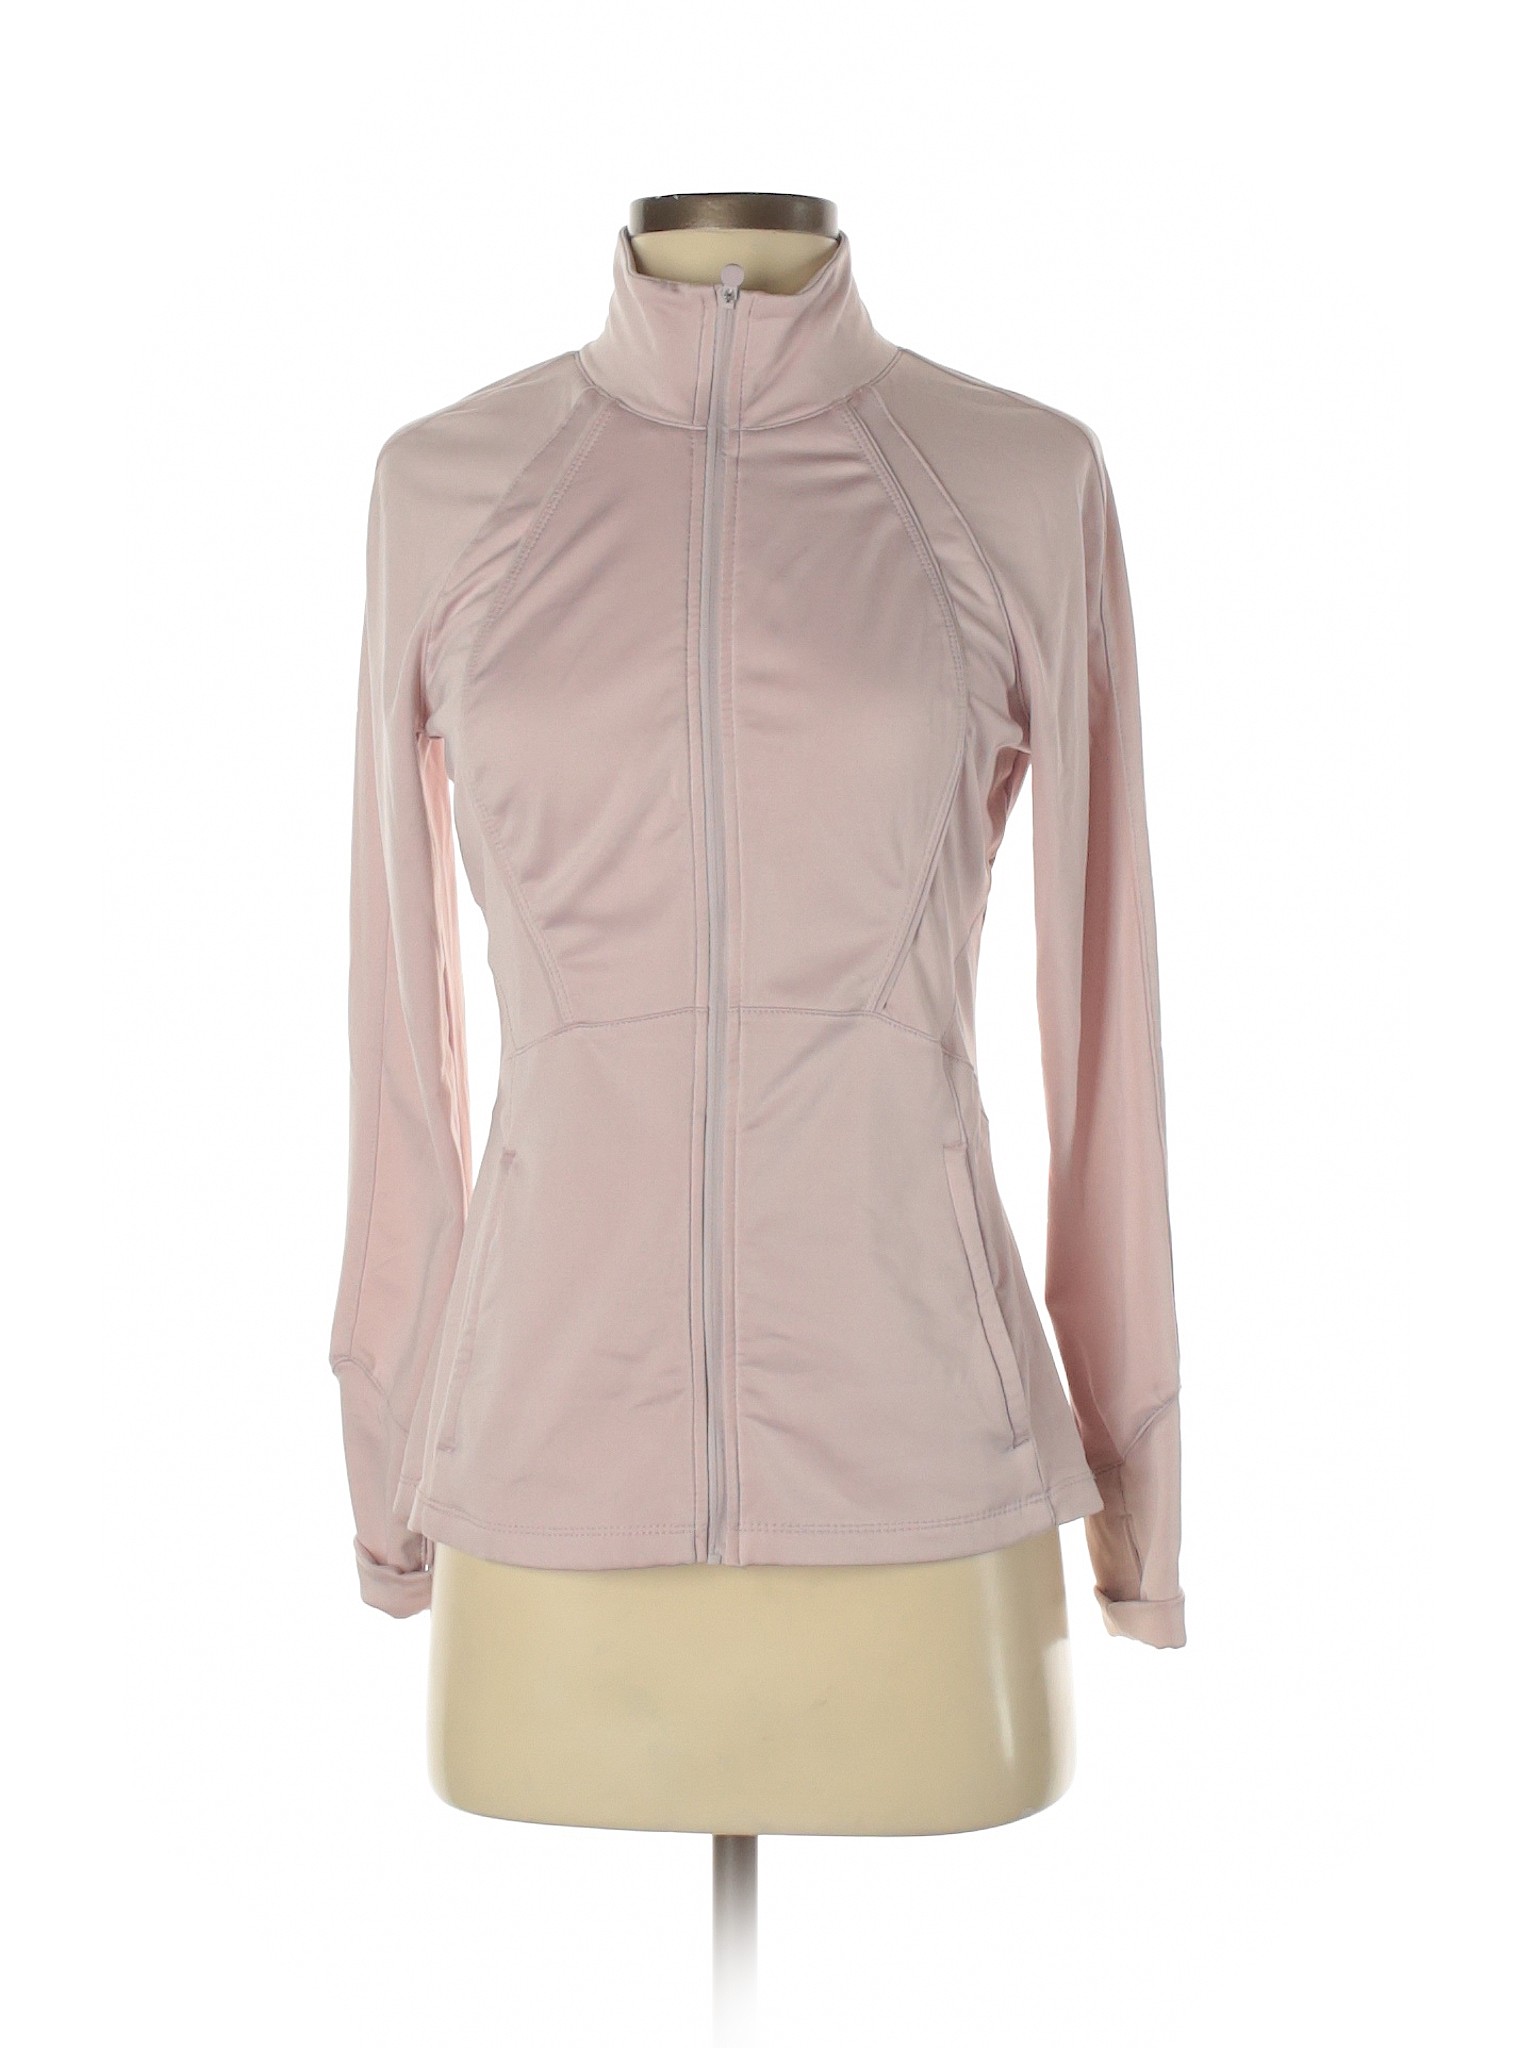 Apana Solid Pink Track Jacket Size XS - 82% off | thredUP